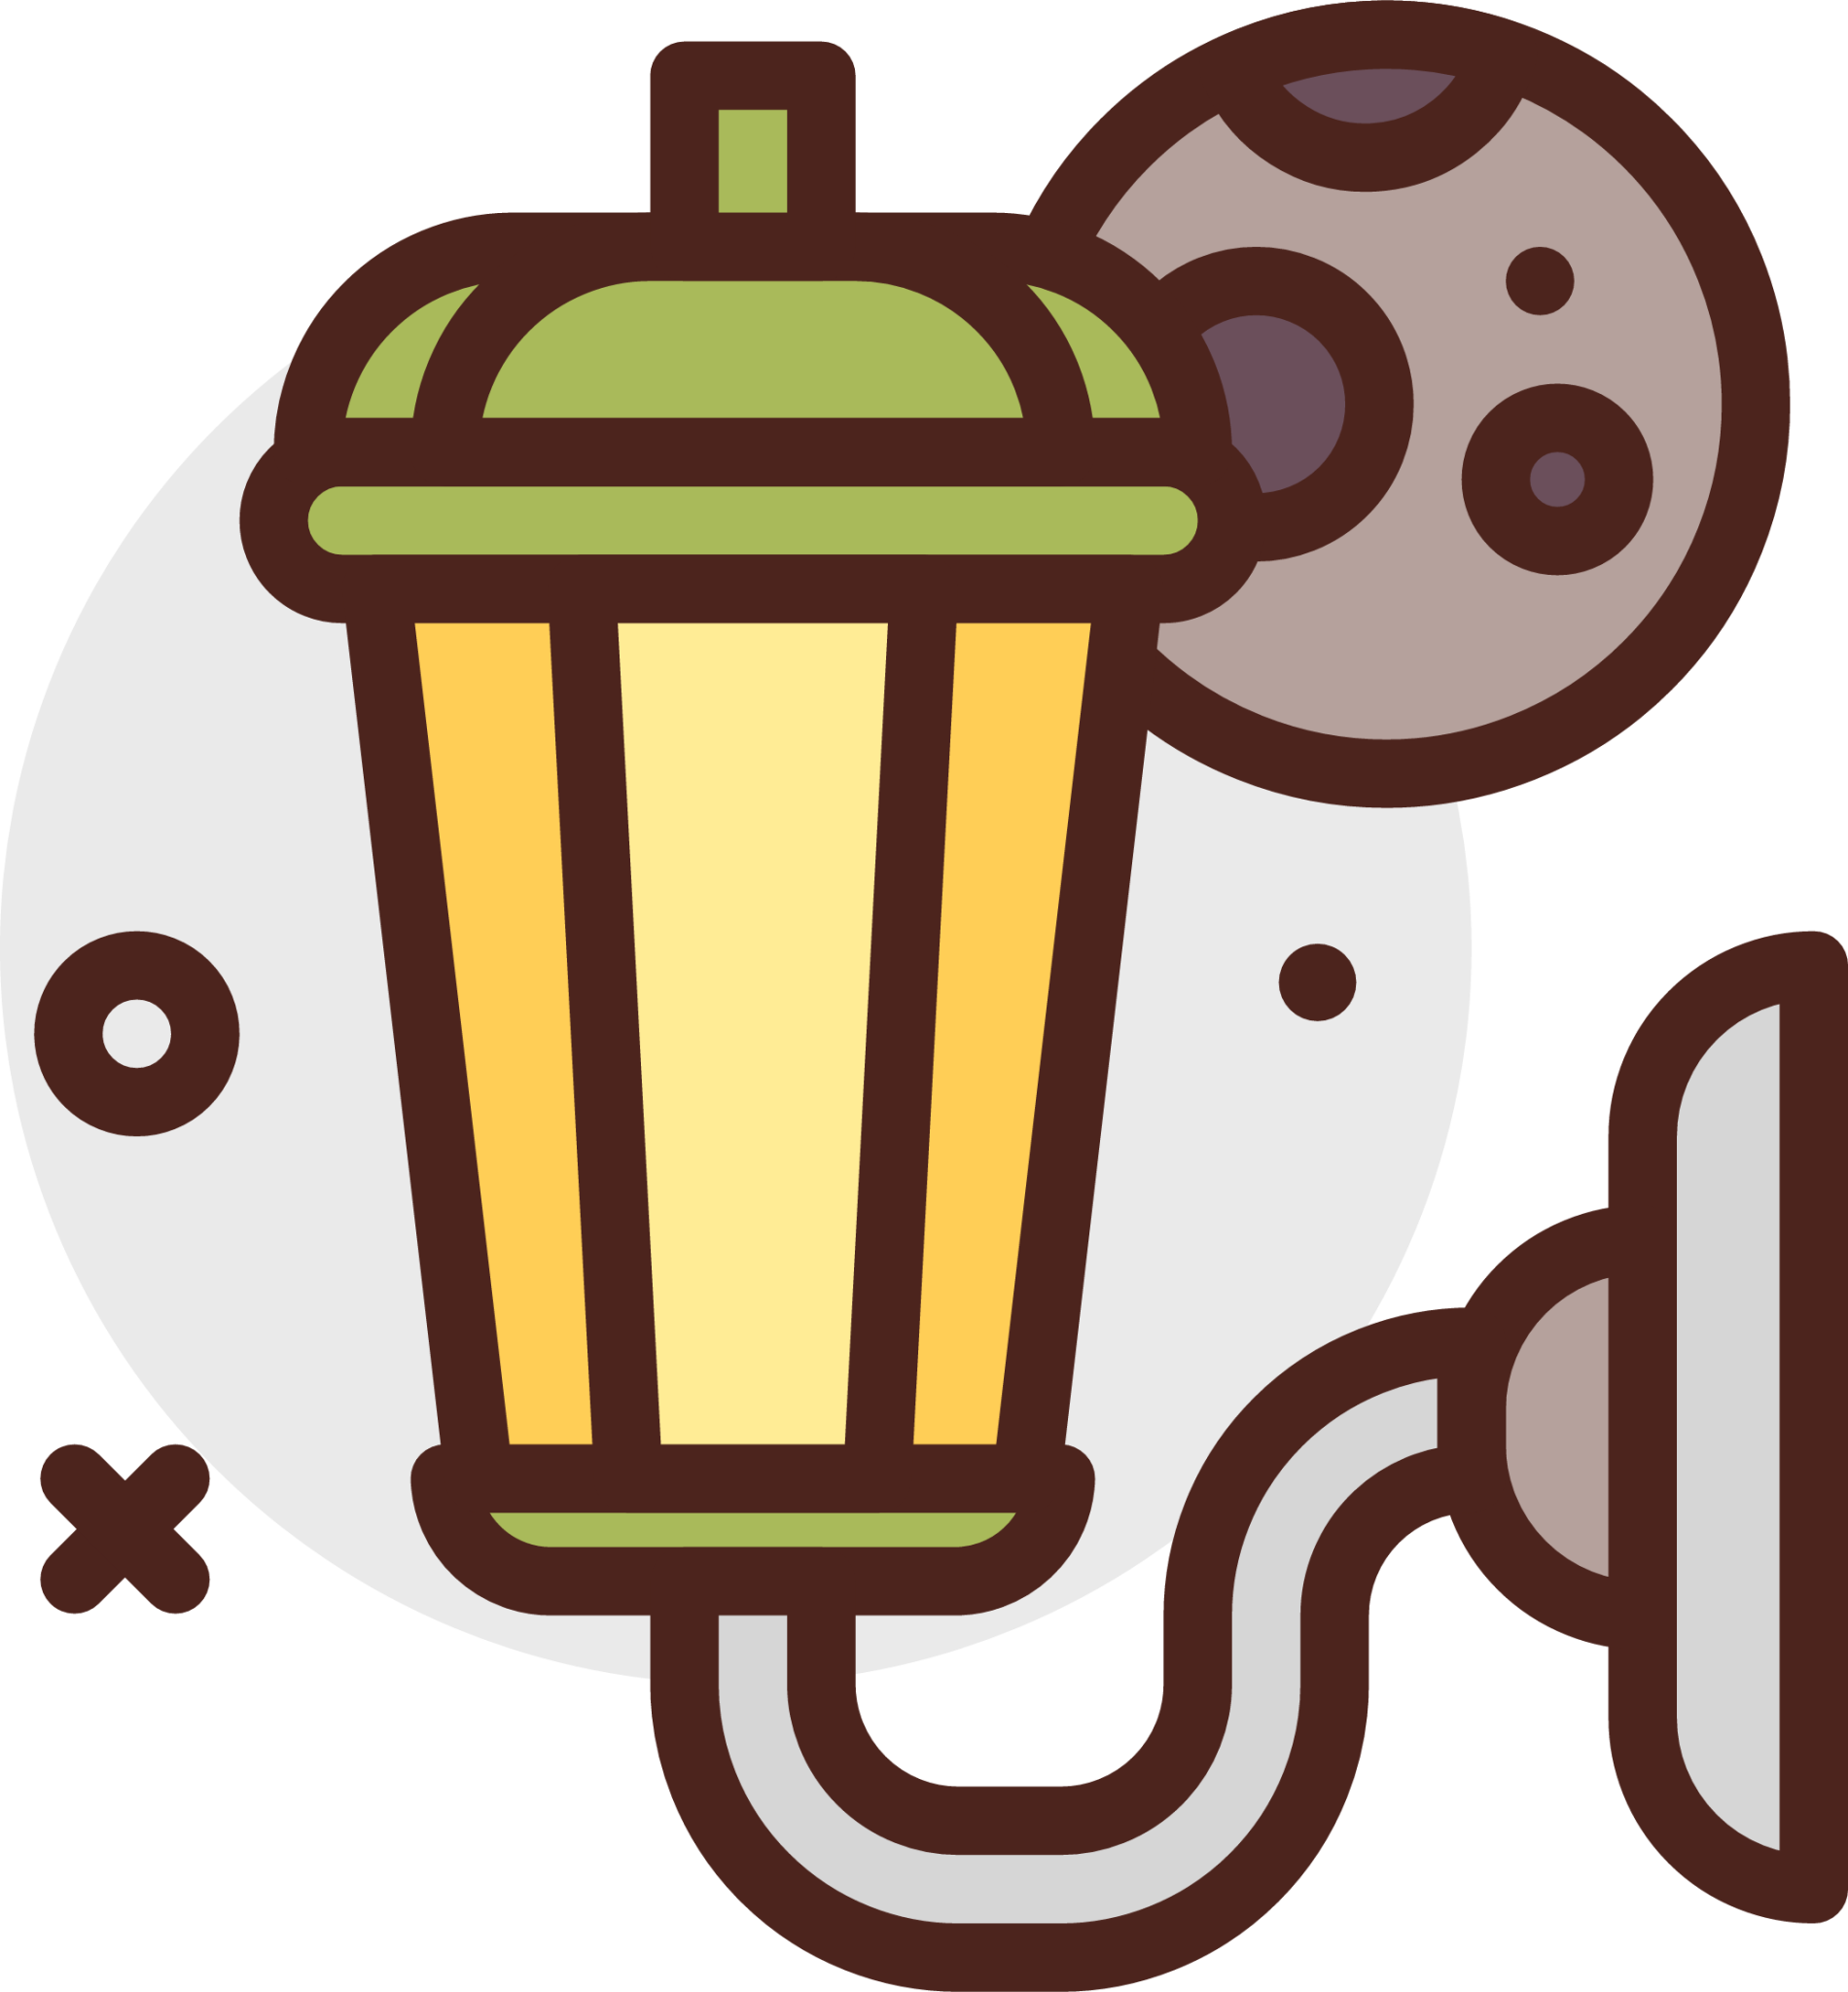 lantern night icon